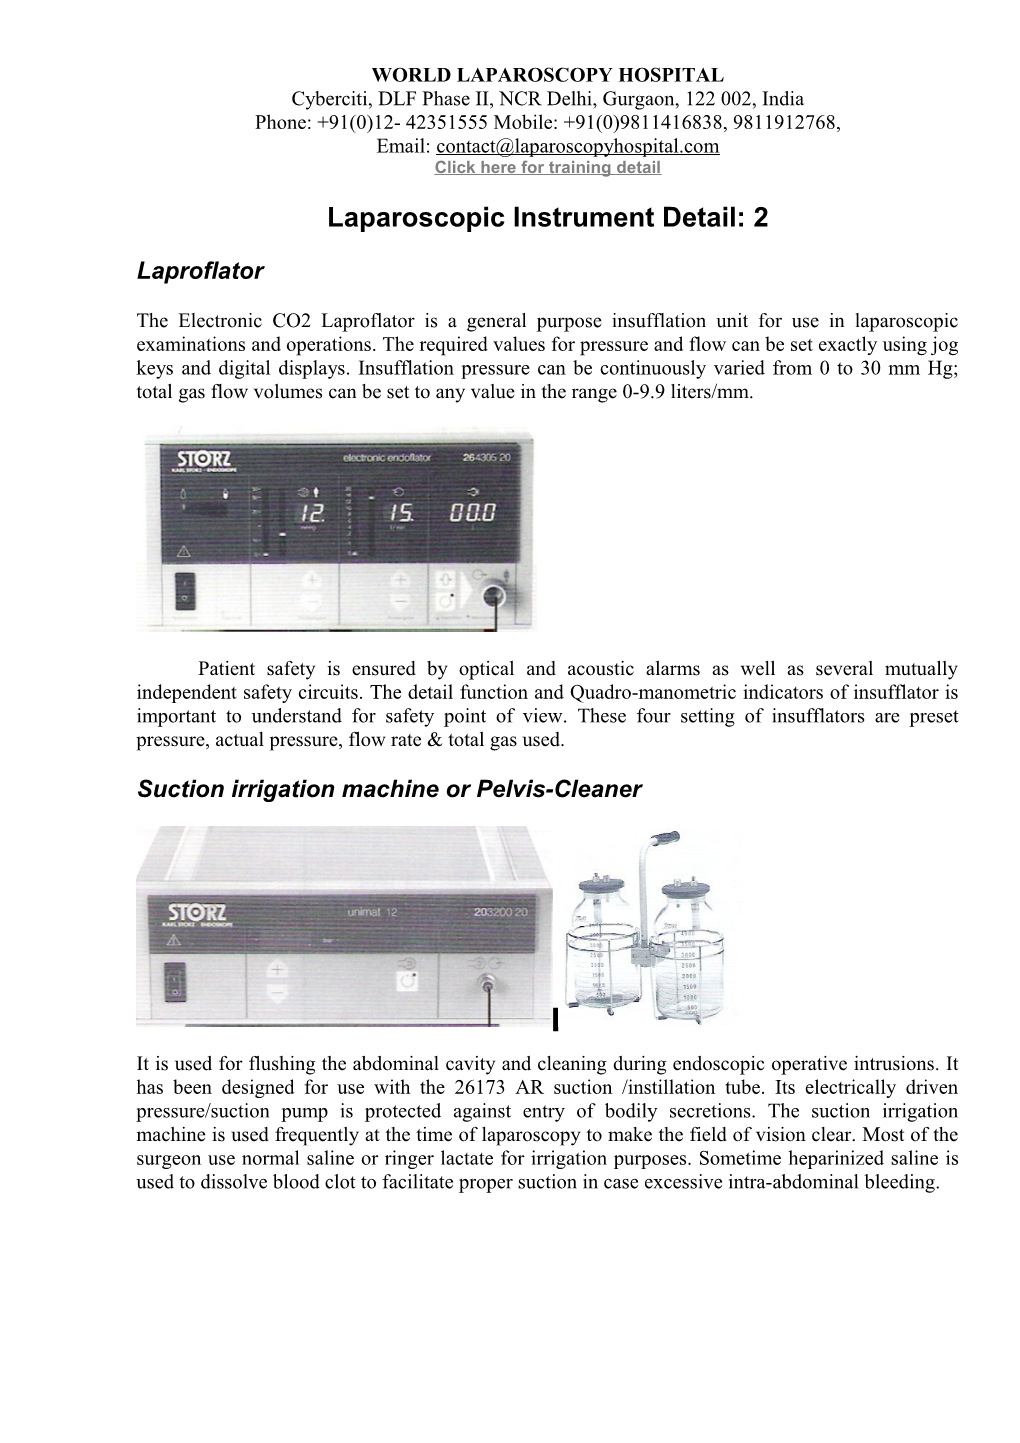 Laparoscopic Instrument Detail: 2